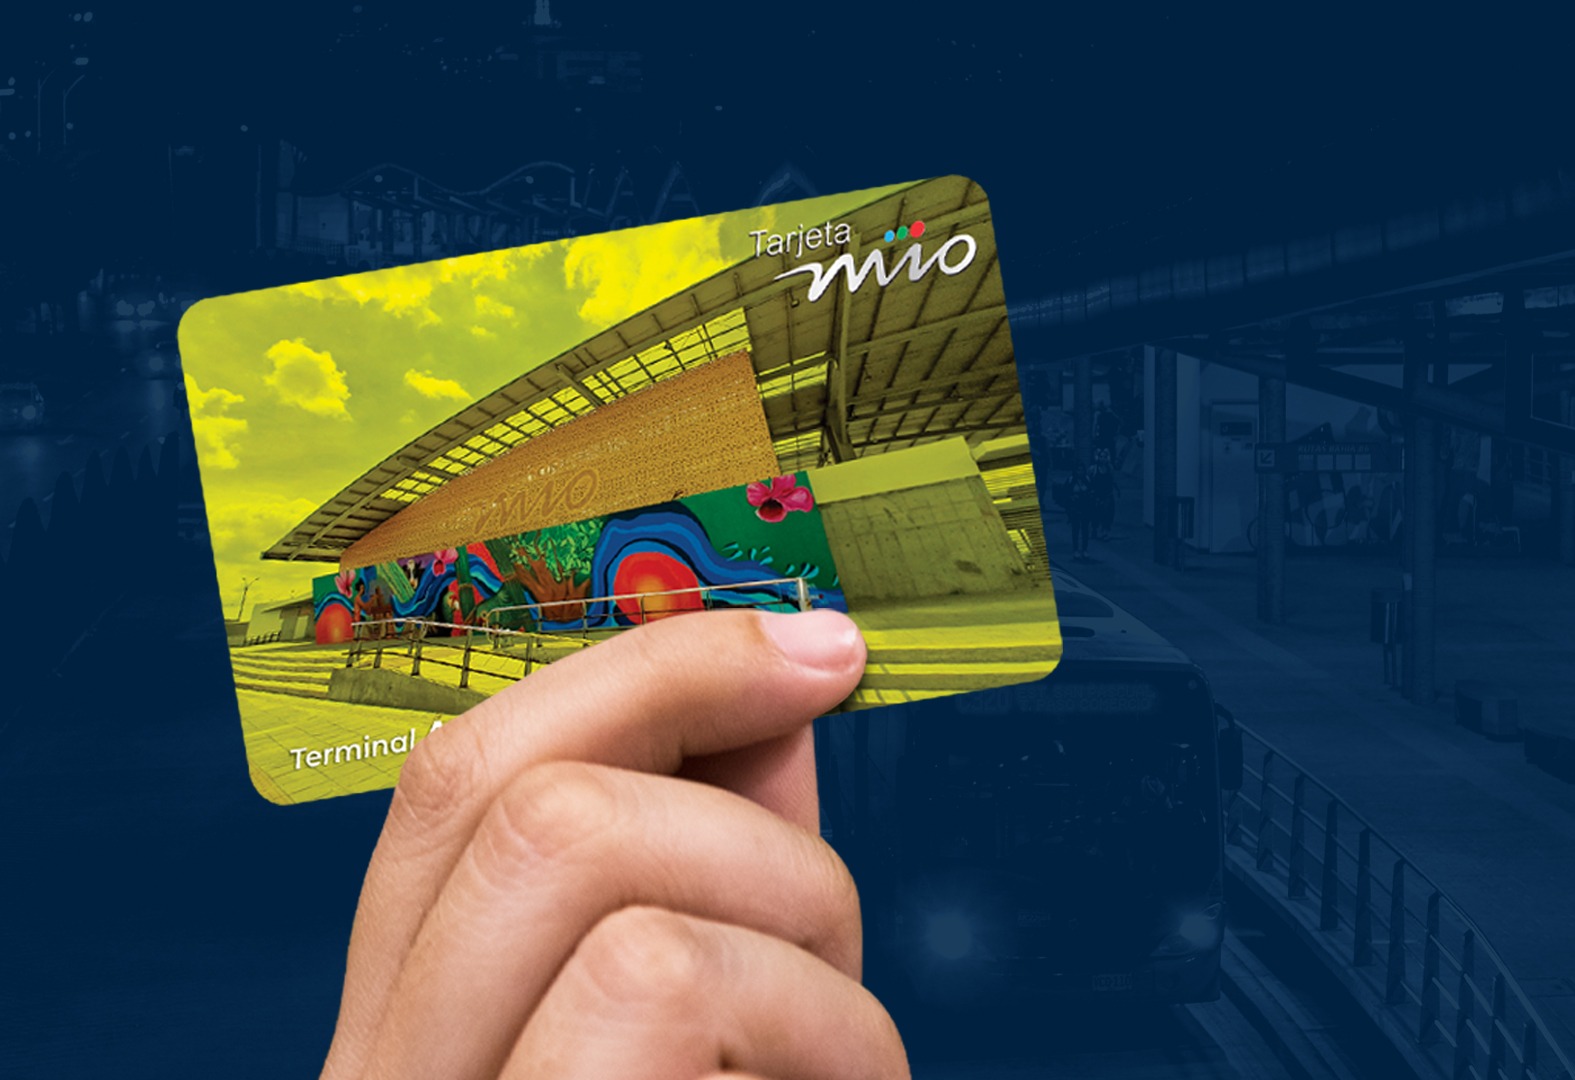 Foto donde se ve una mano sosteniendo la tarjeta del MIO.